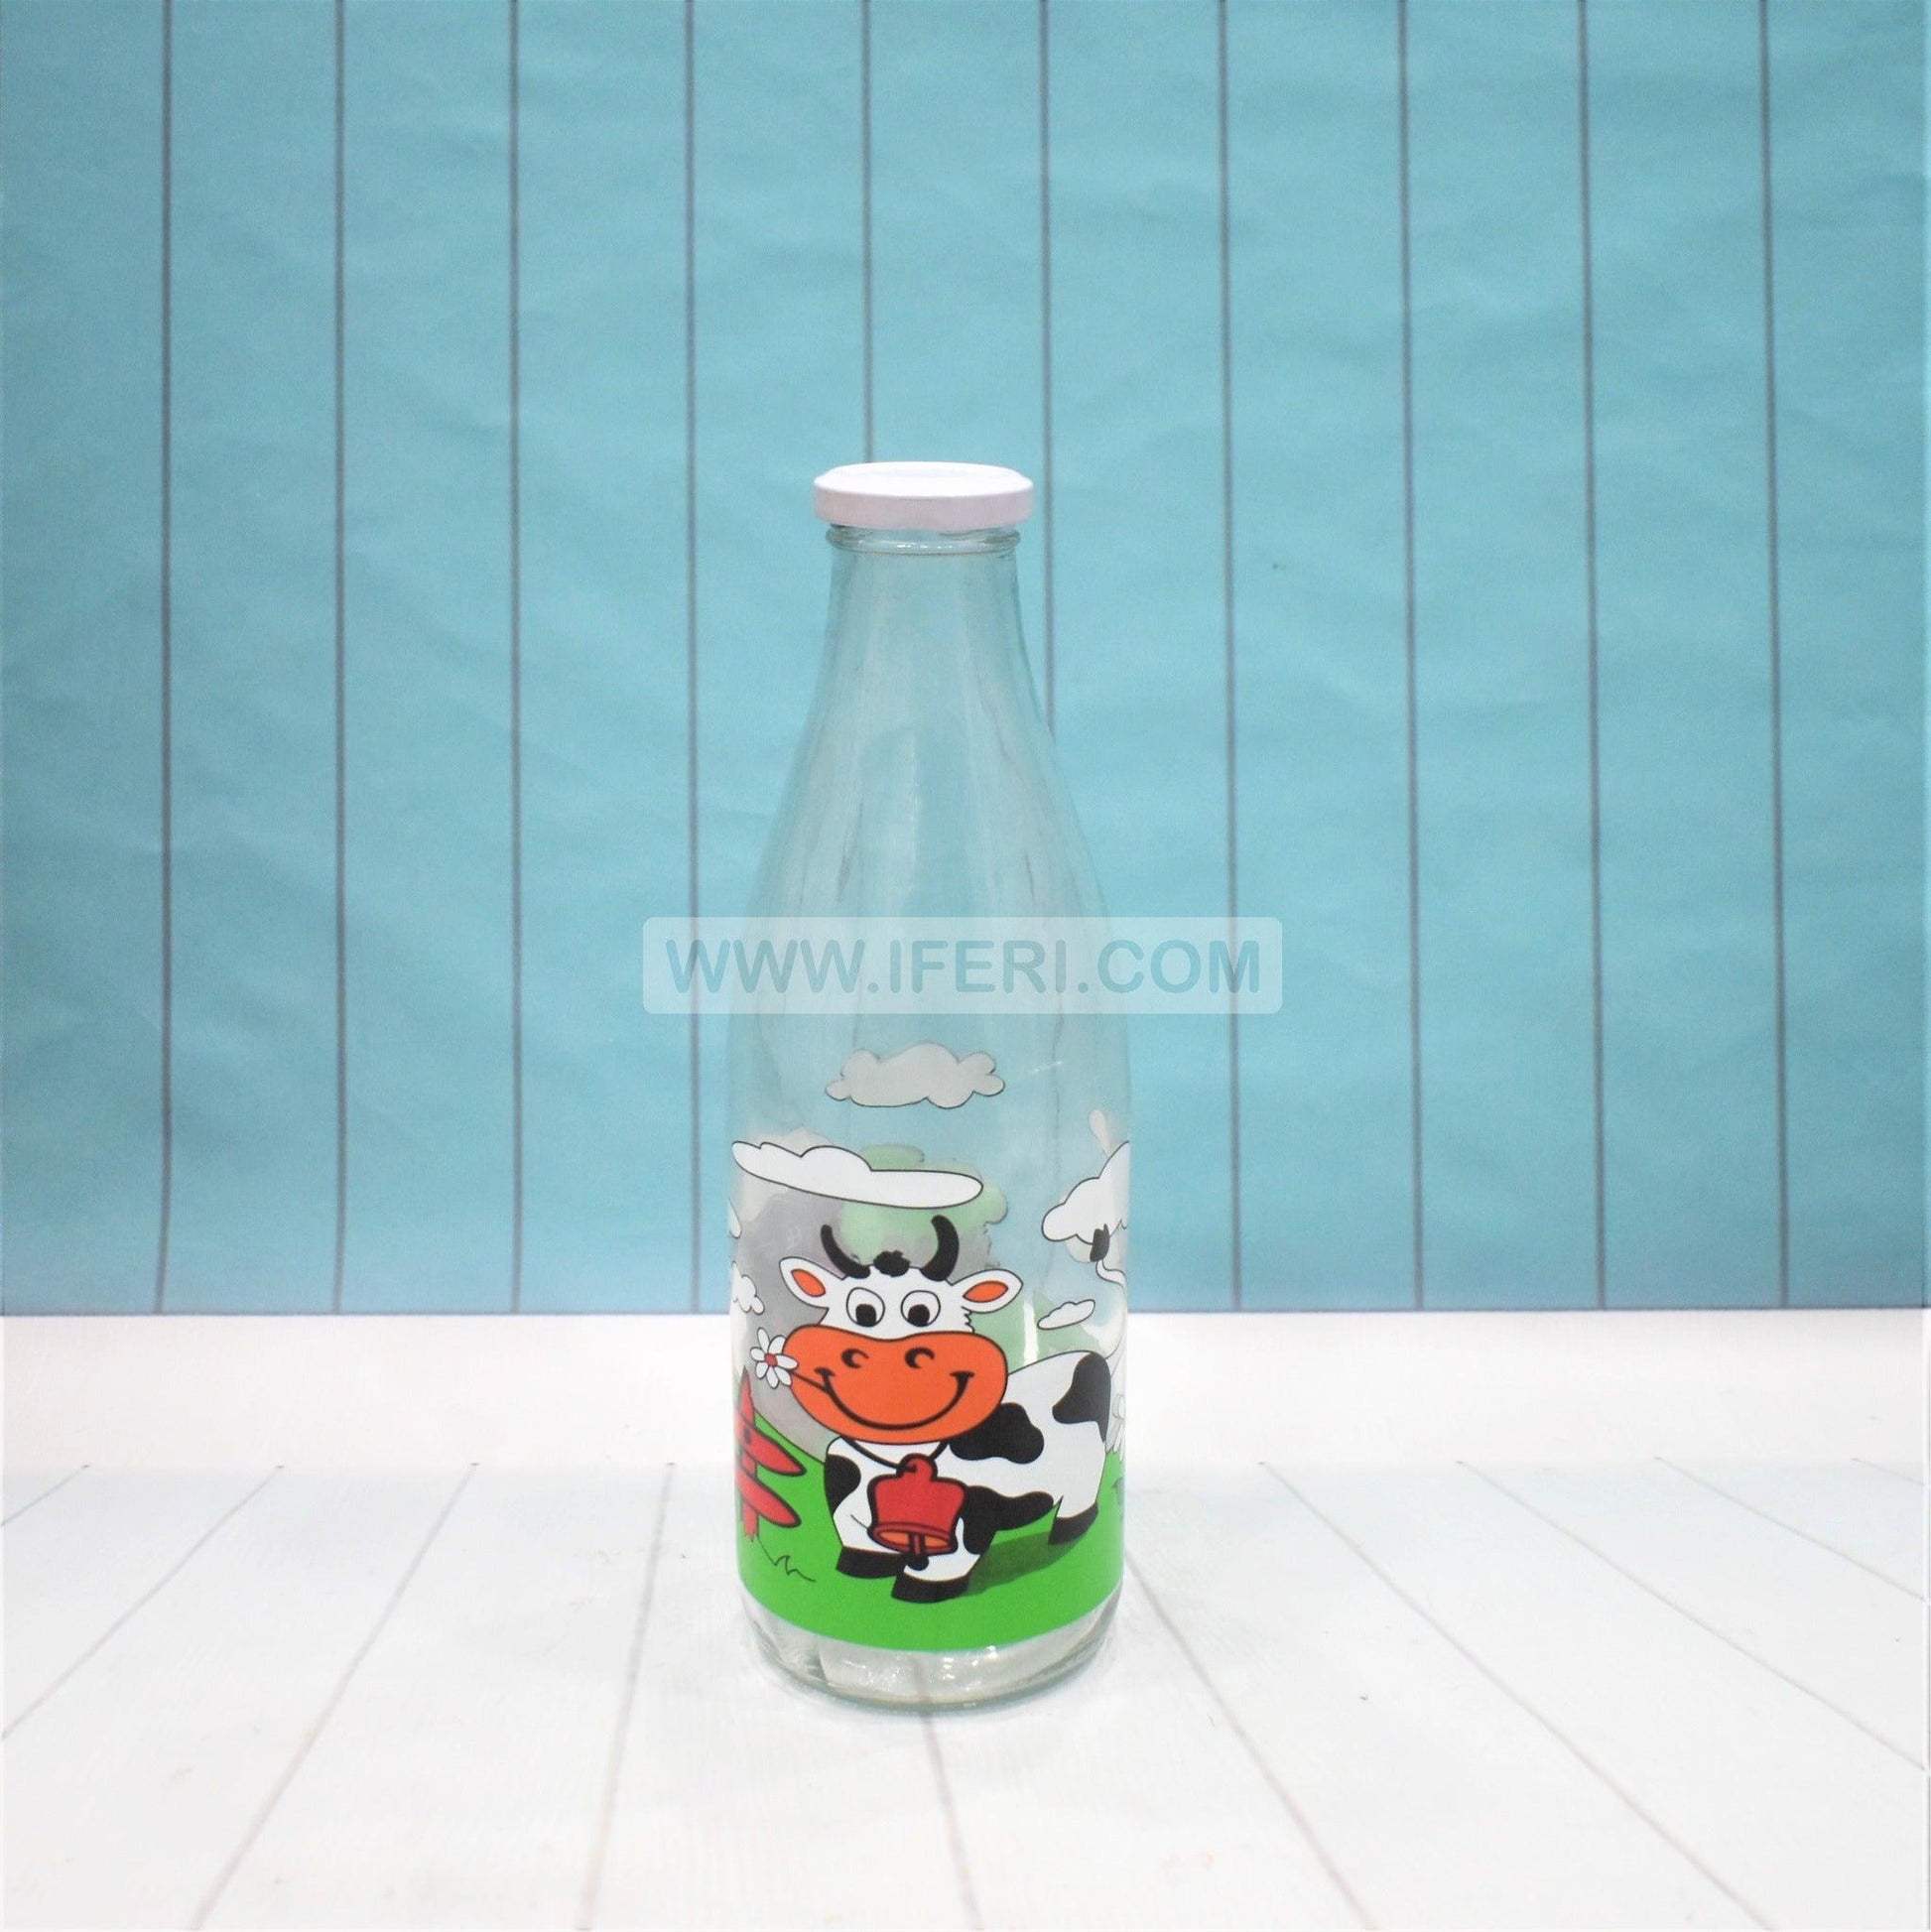 1000ML Water Glass Juice, Milk Bottle FT2156 Price in Bangladesh - iferi.com